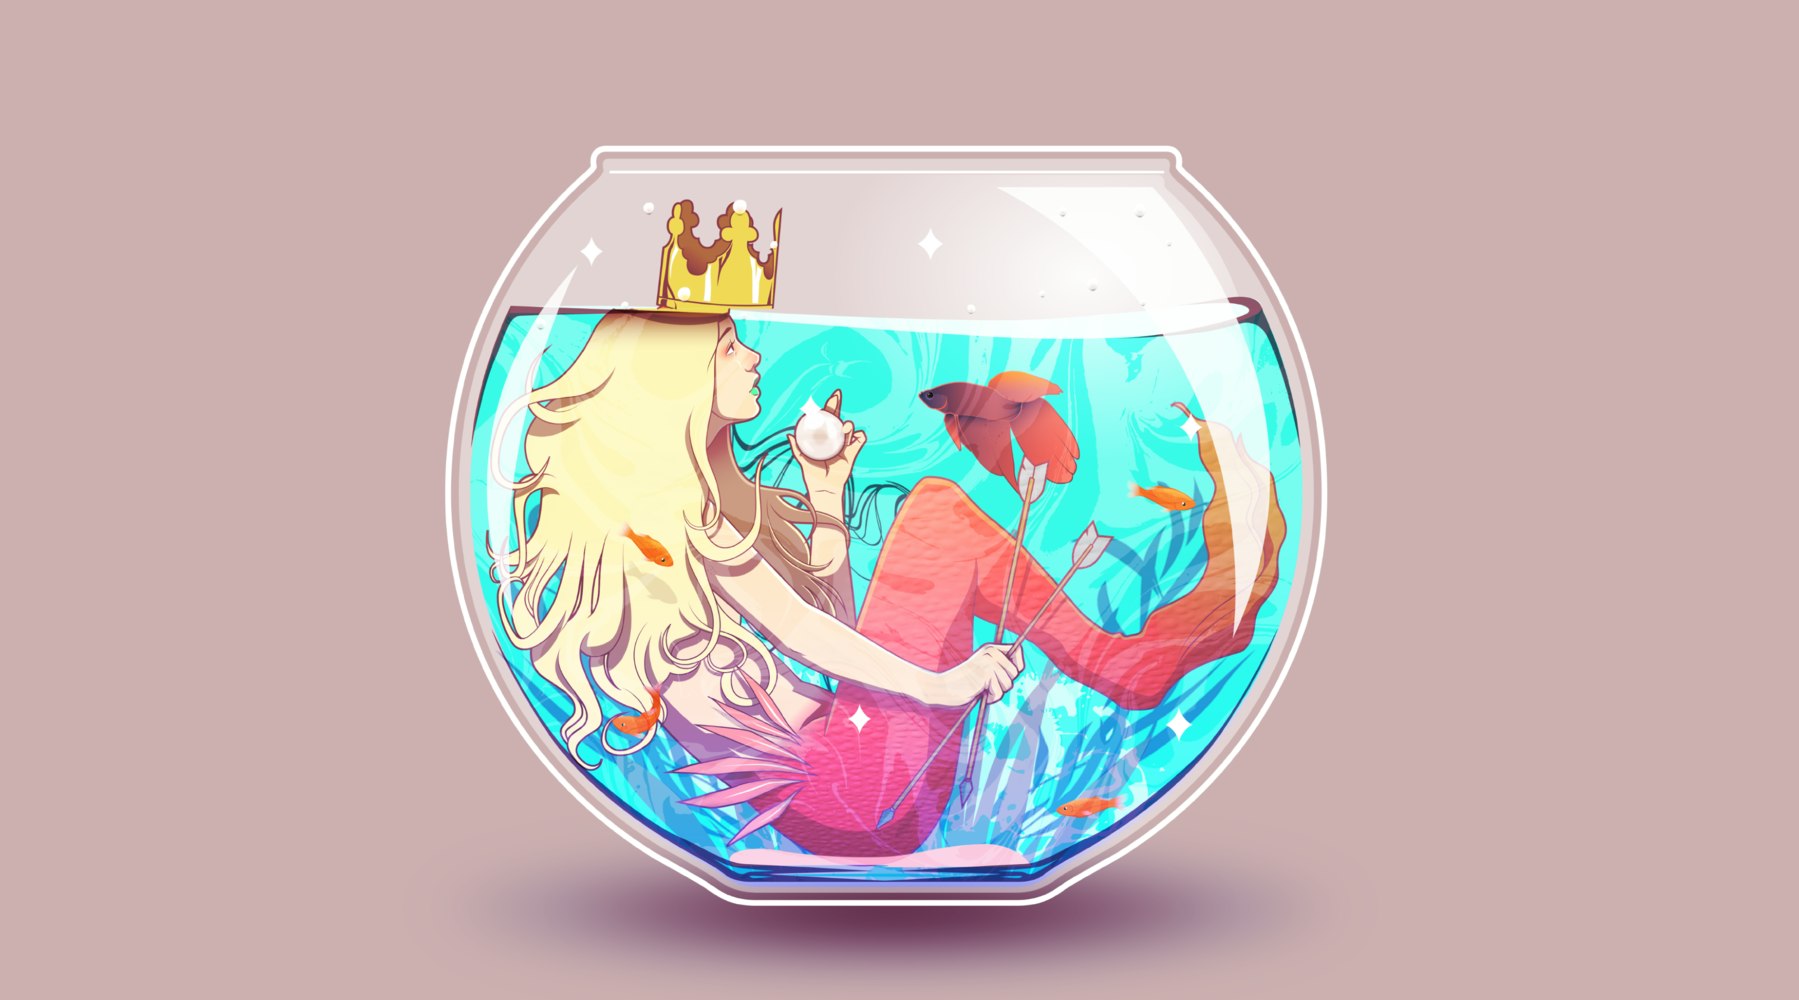 Mermaid sitting inside a small fishbowl